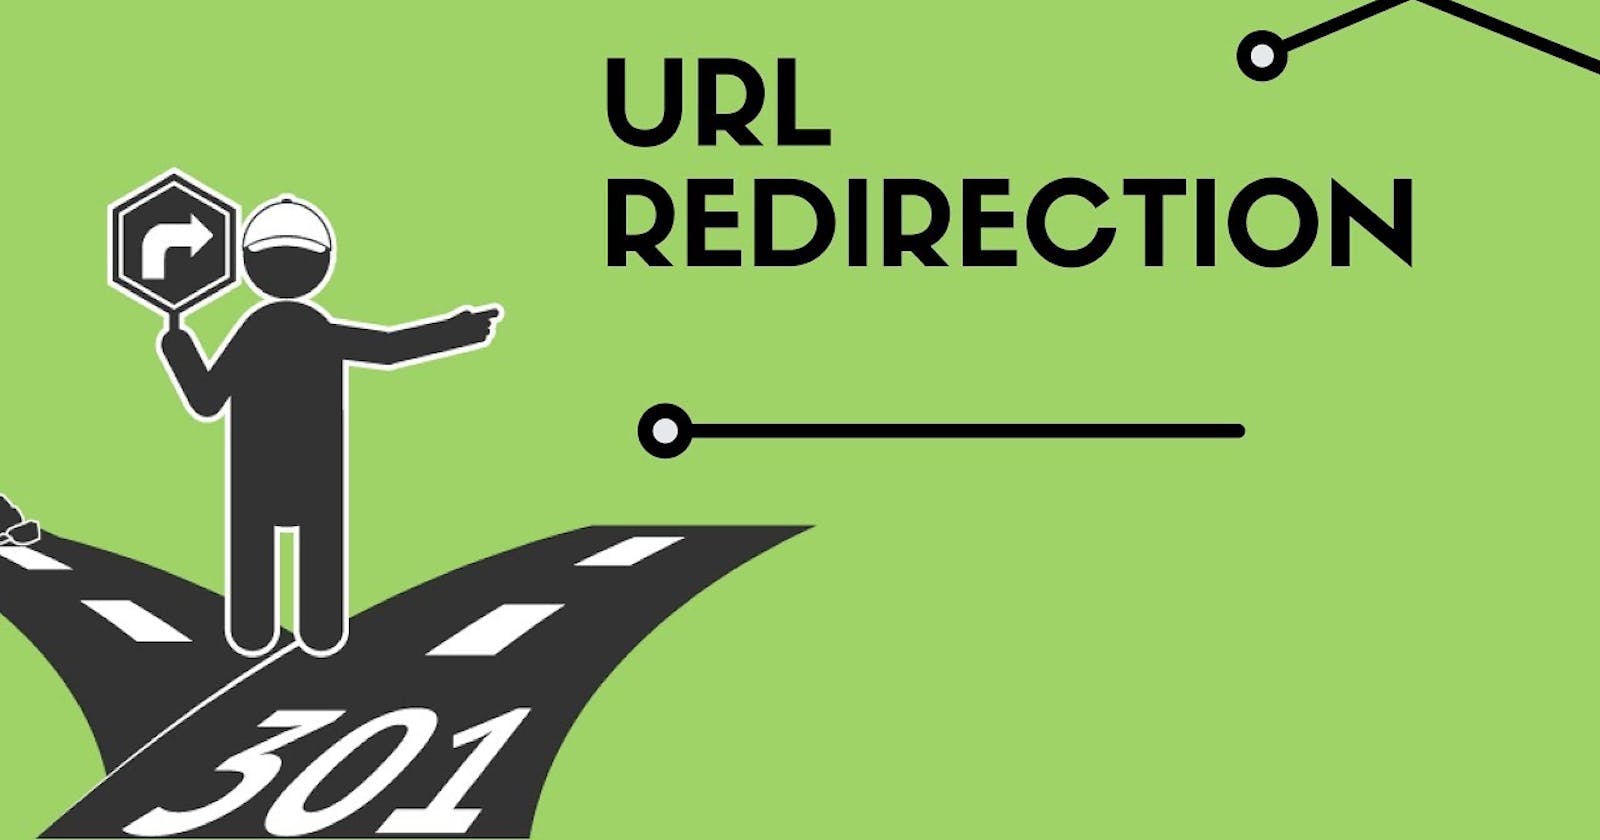 URL redirection